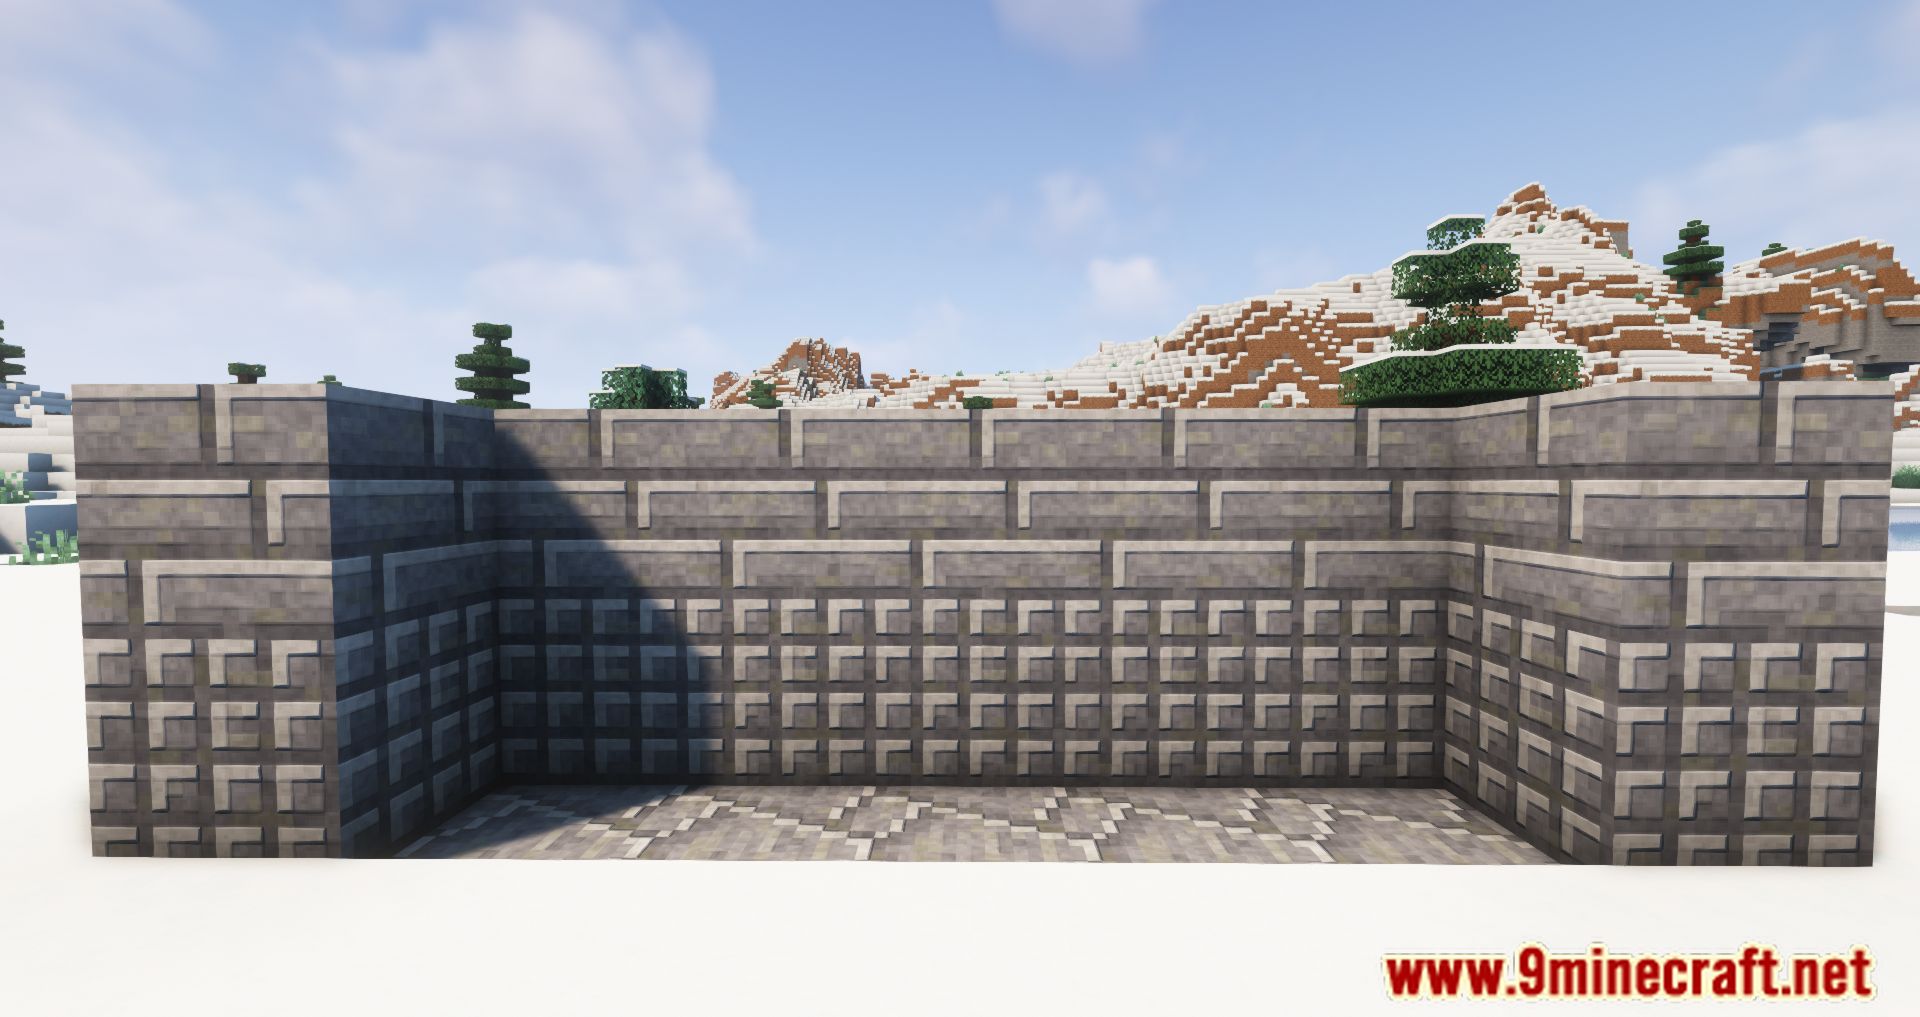 MCPE-129078] Items do not line up with Chiseled stone brick block - Jira